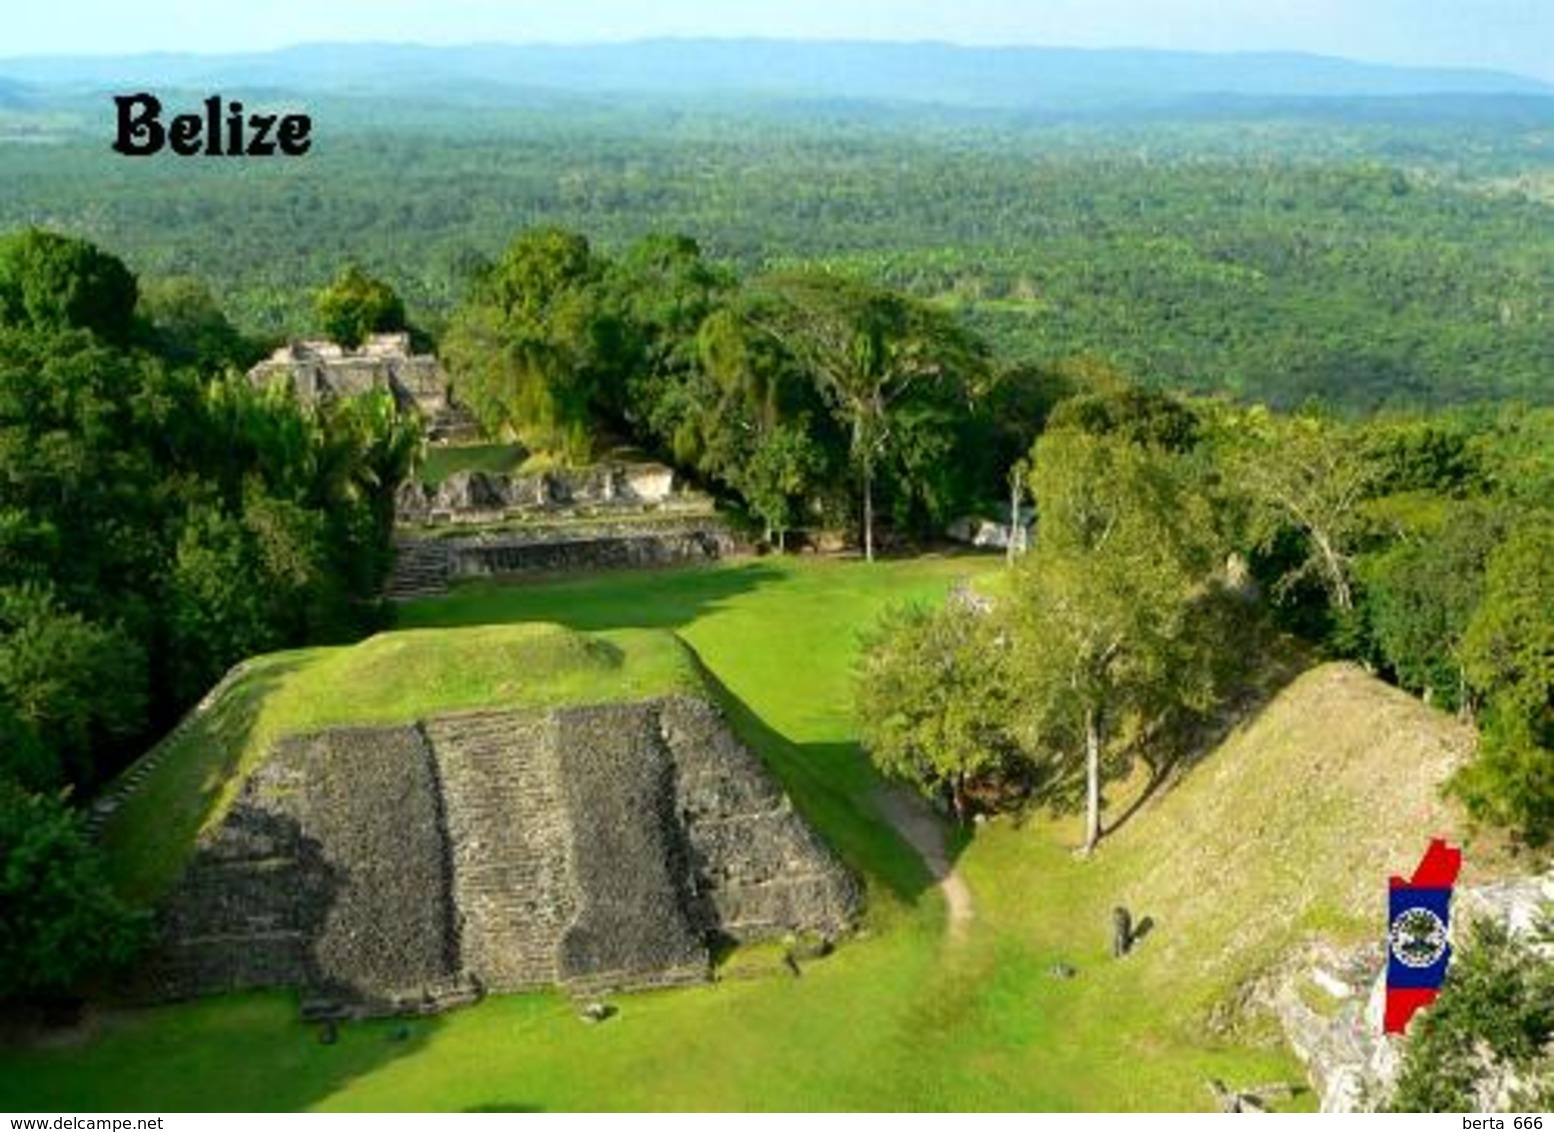 Belize Mayan Ruins New Postcard - Belize